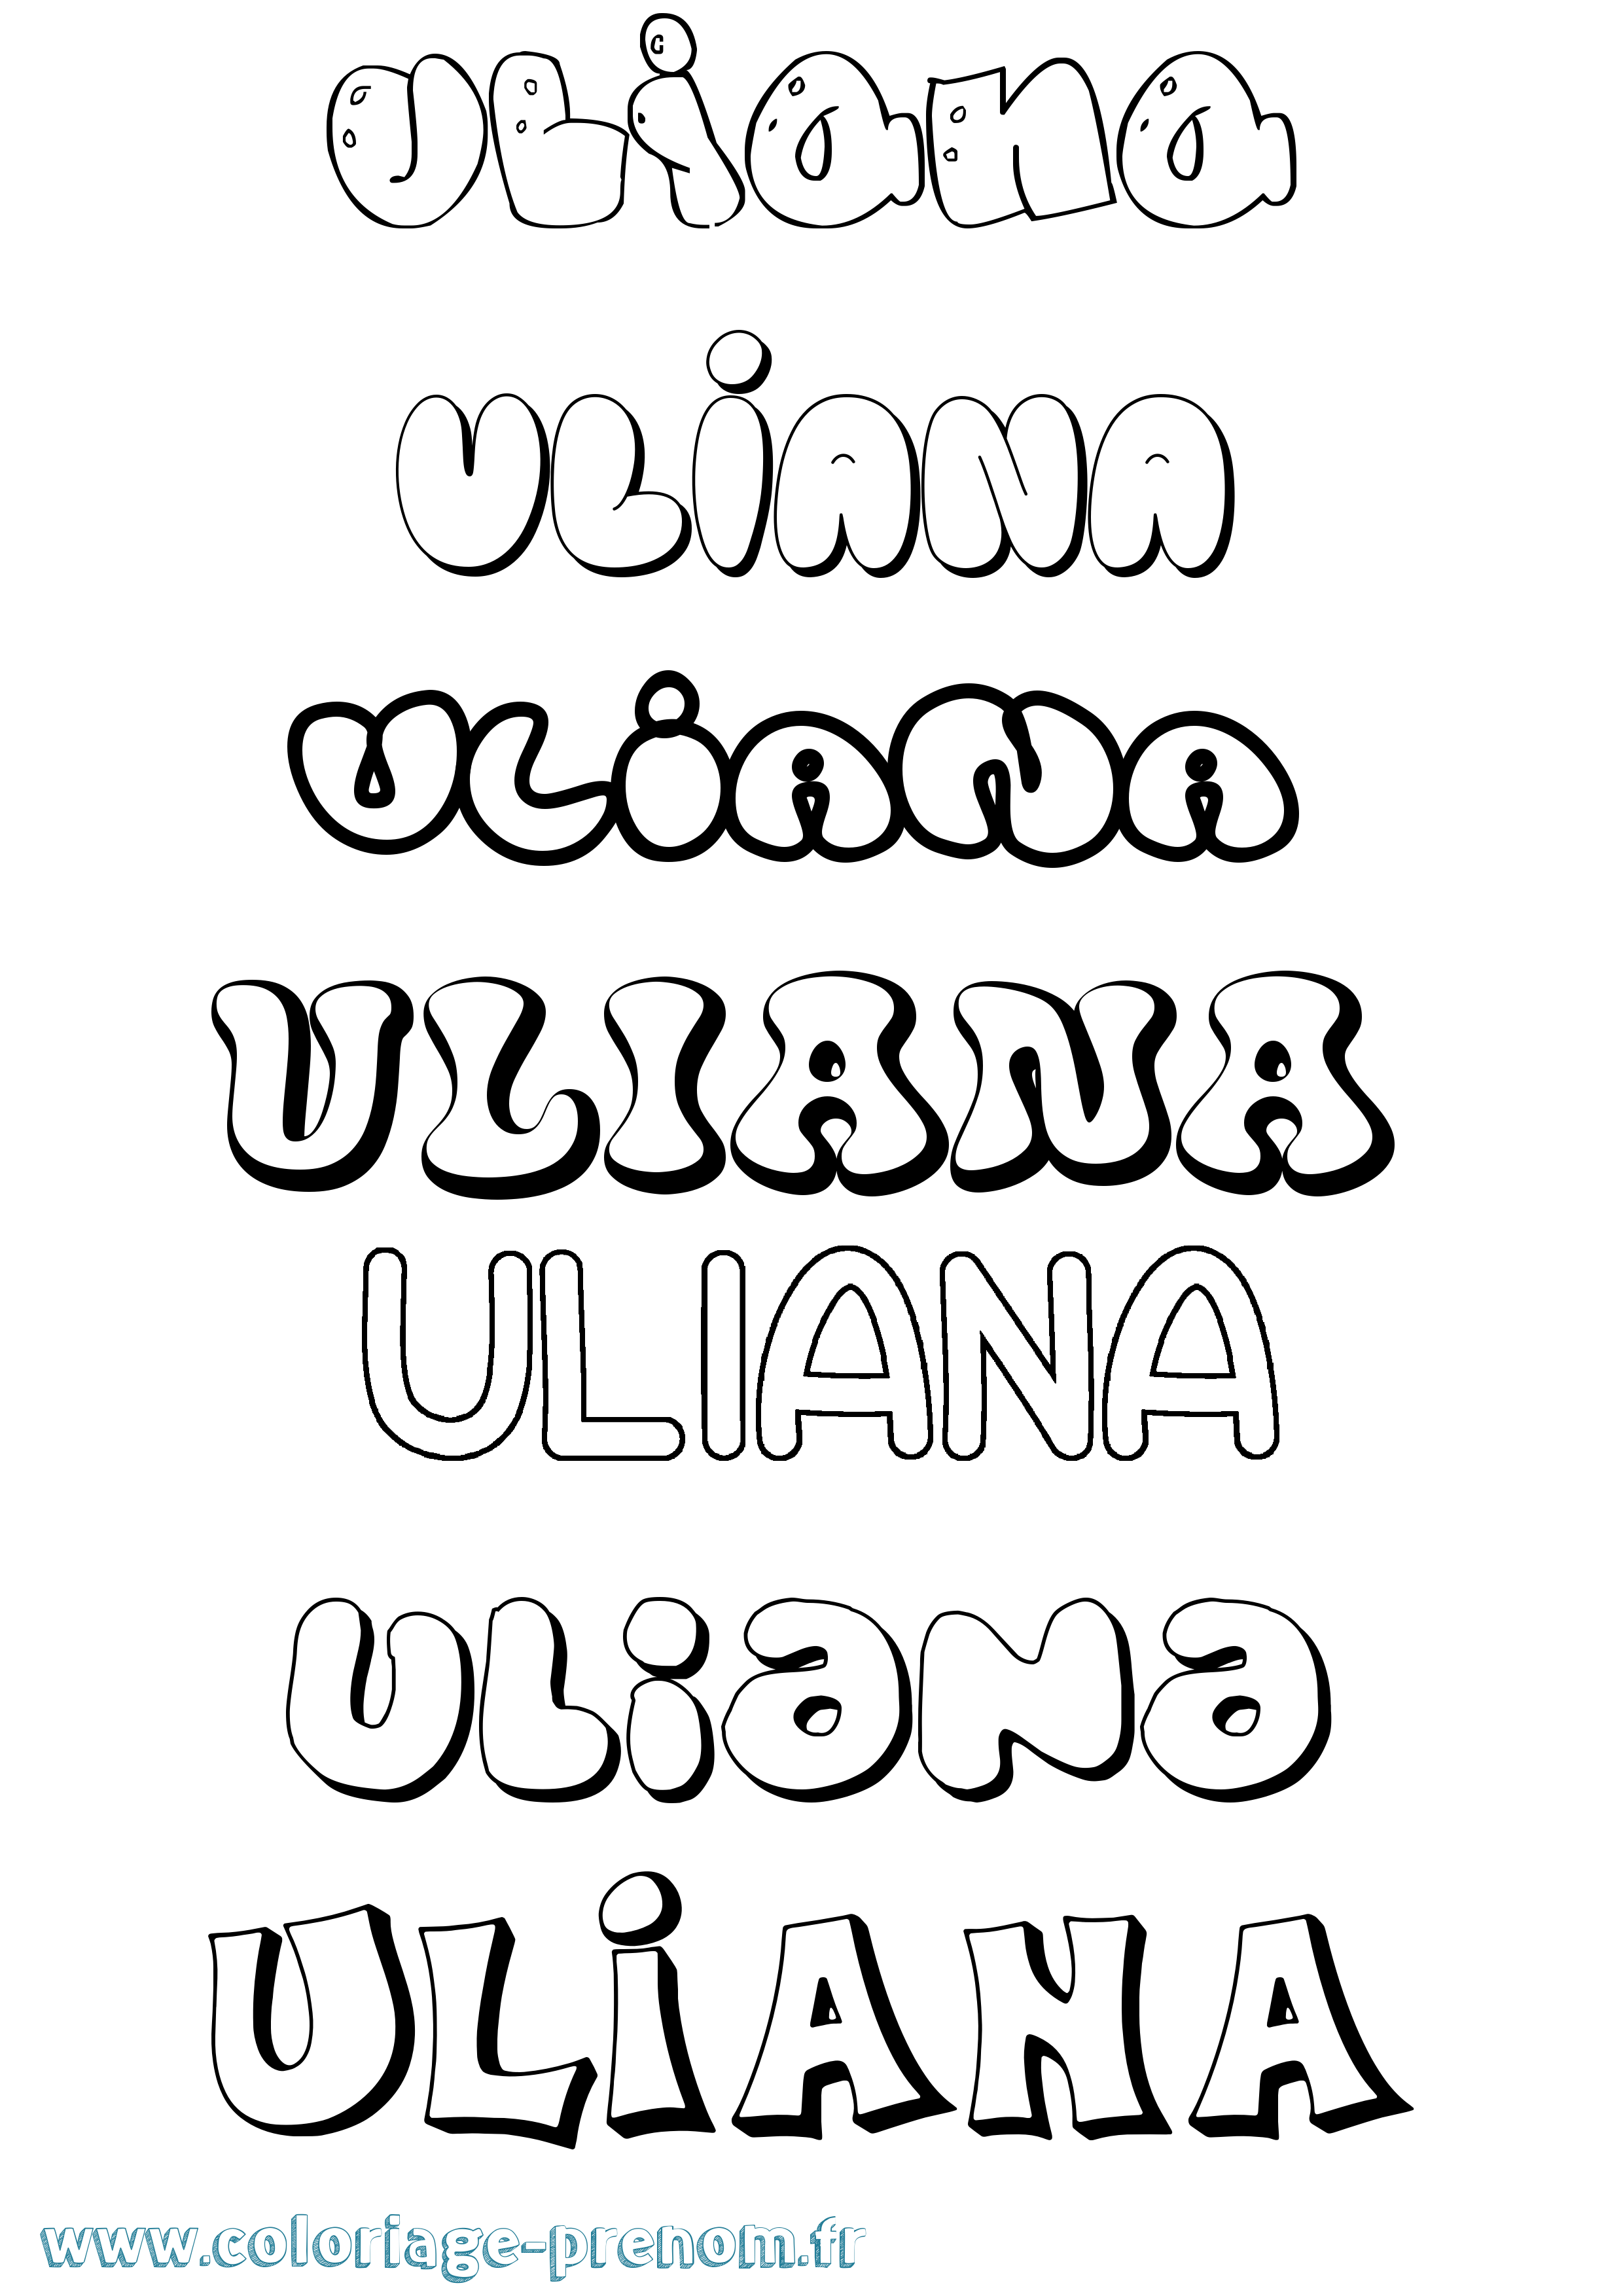 Coloriage prénom Uliana Bubble